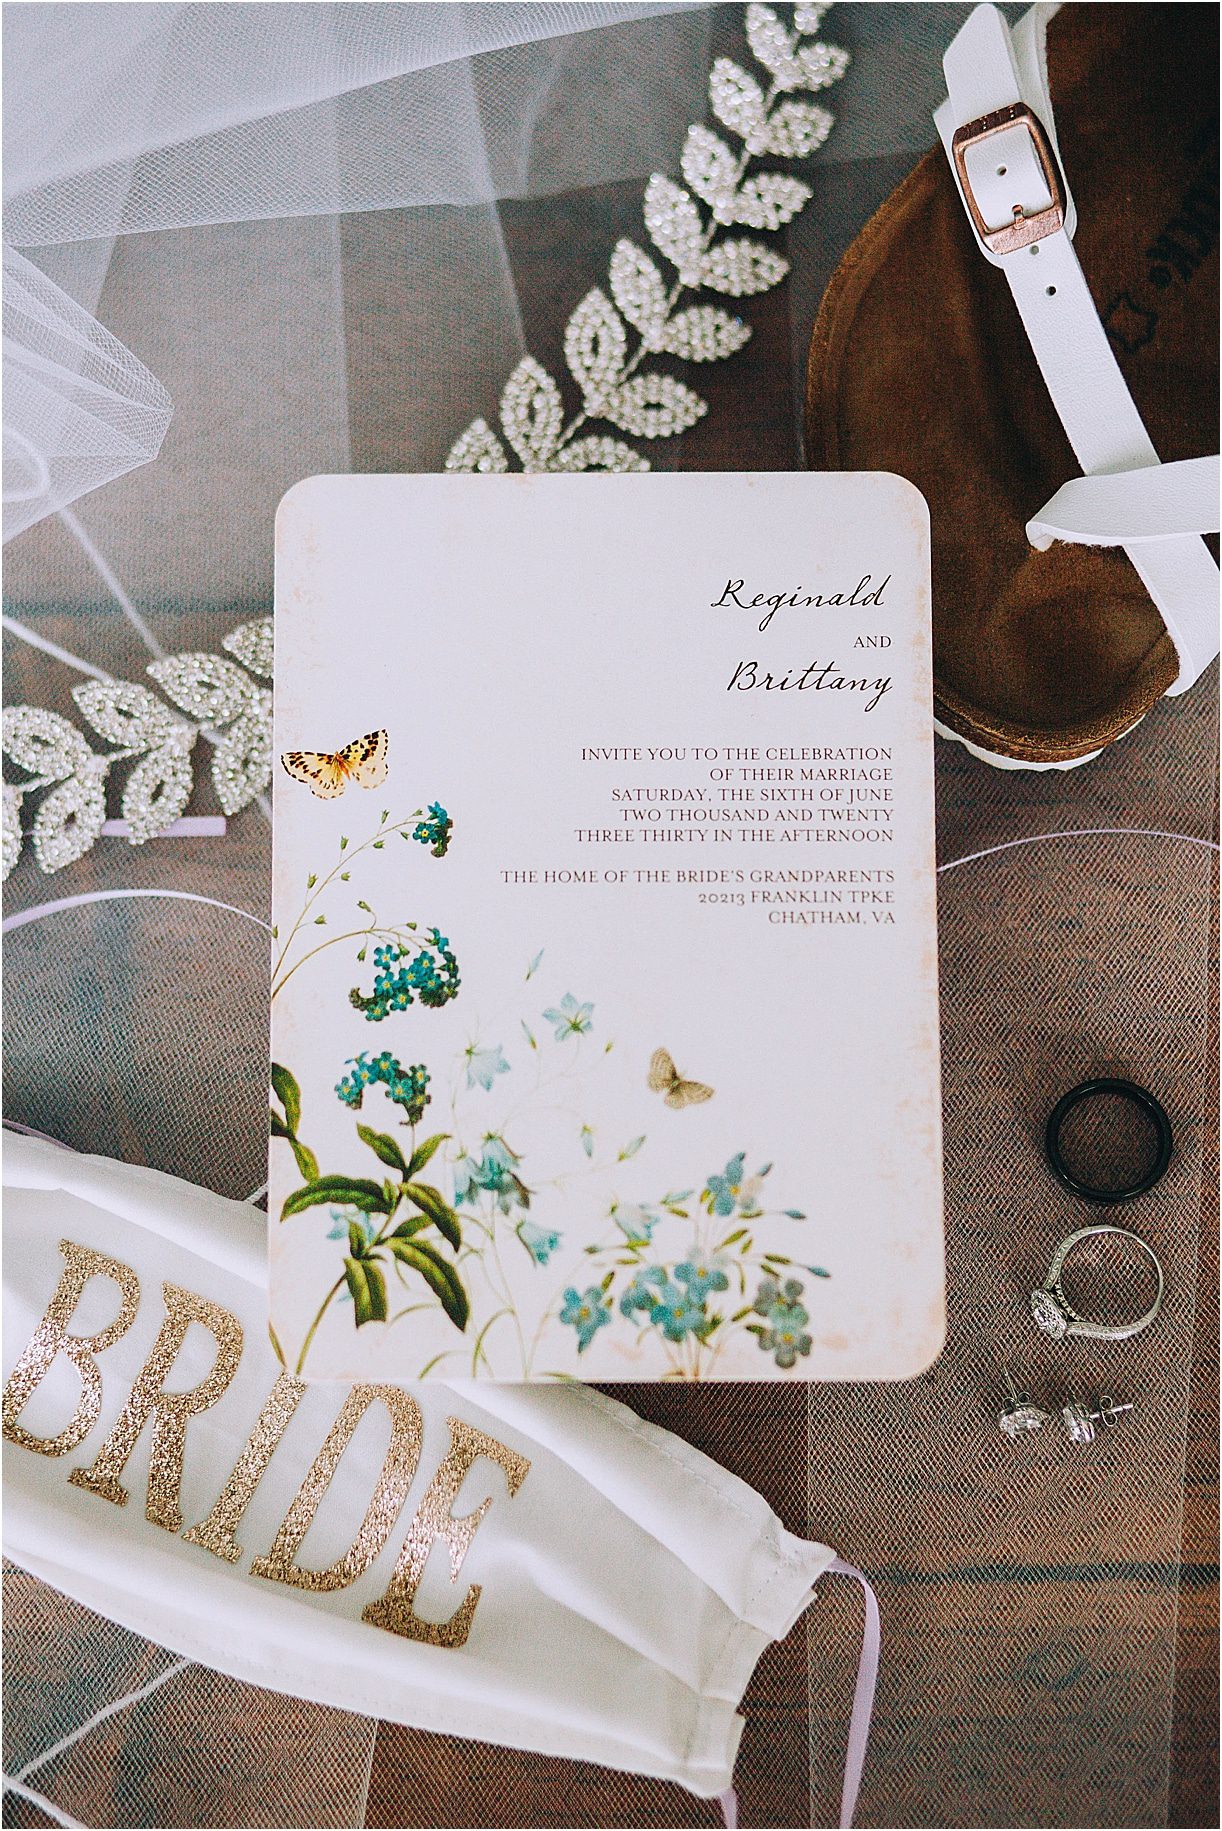 Backyard Wedding | Hill City Bride Virginia Wedding Blog | Interracial Wedding Invitation